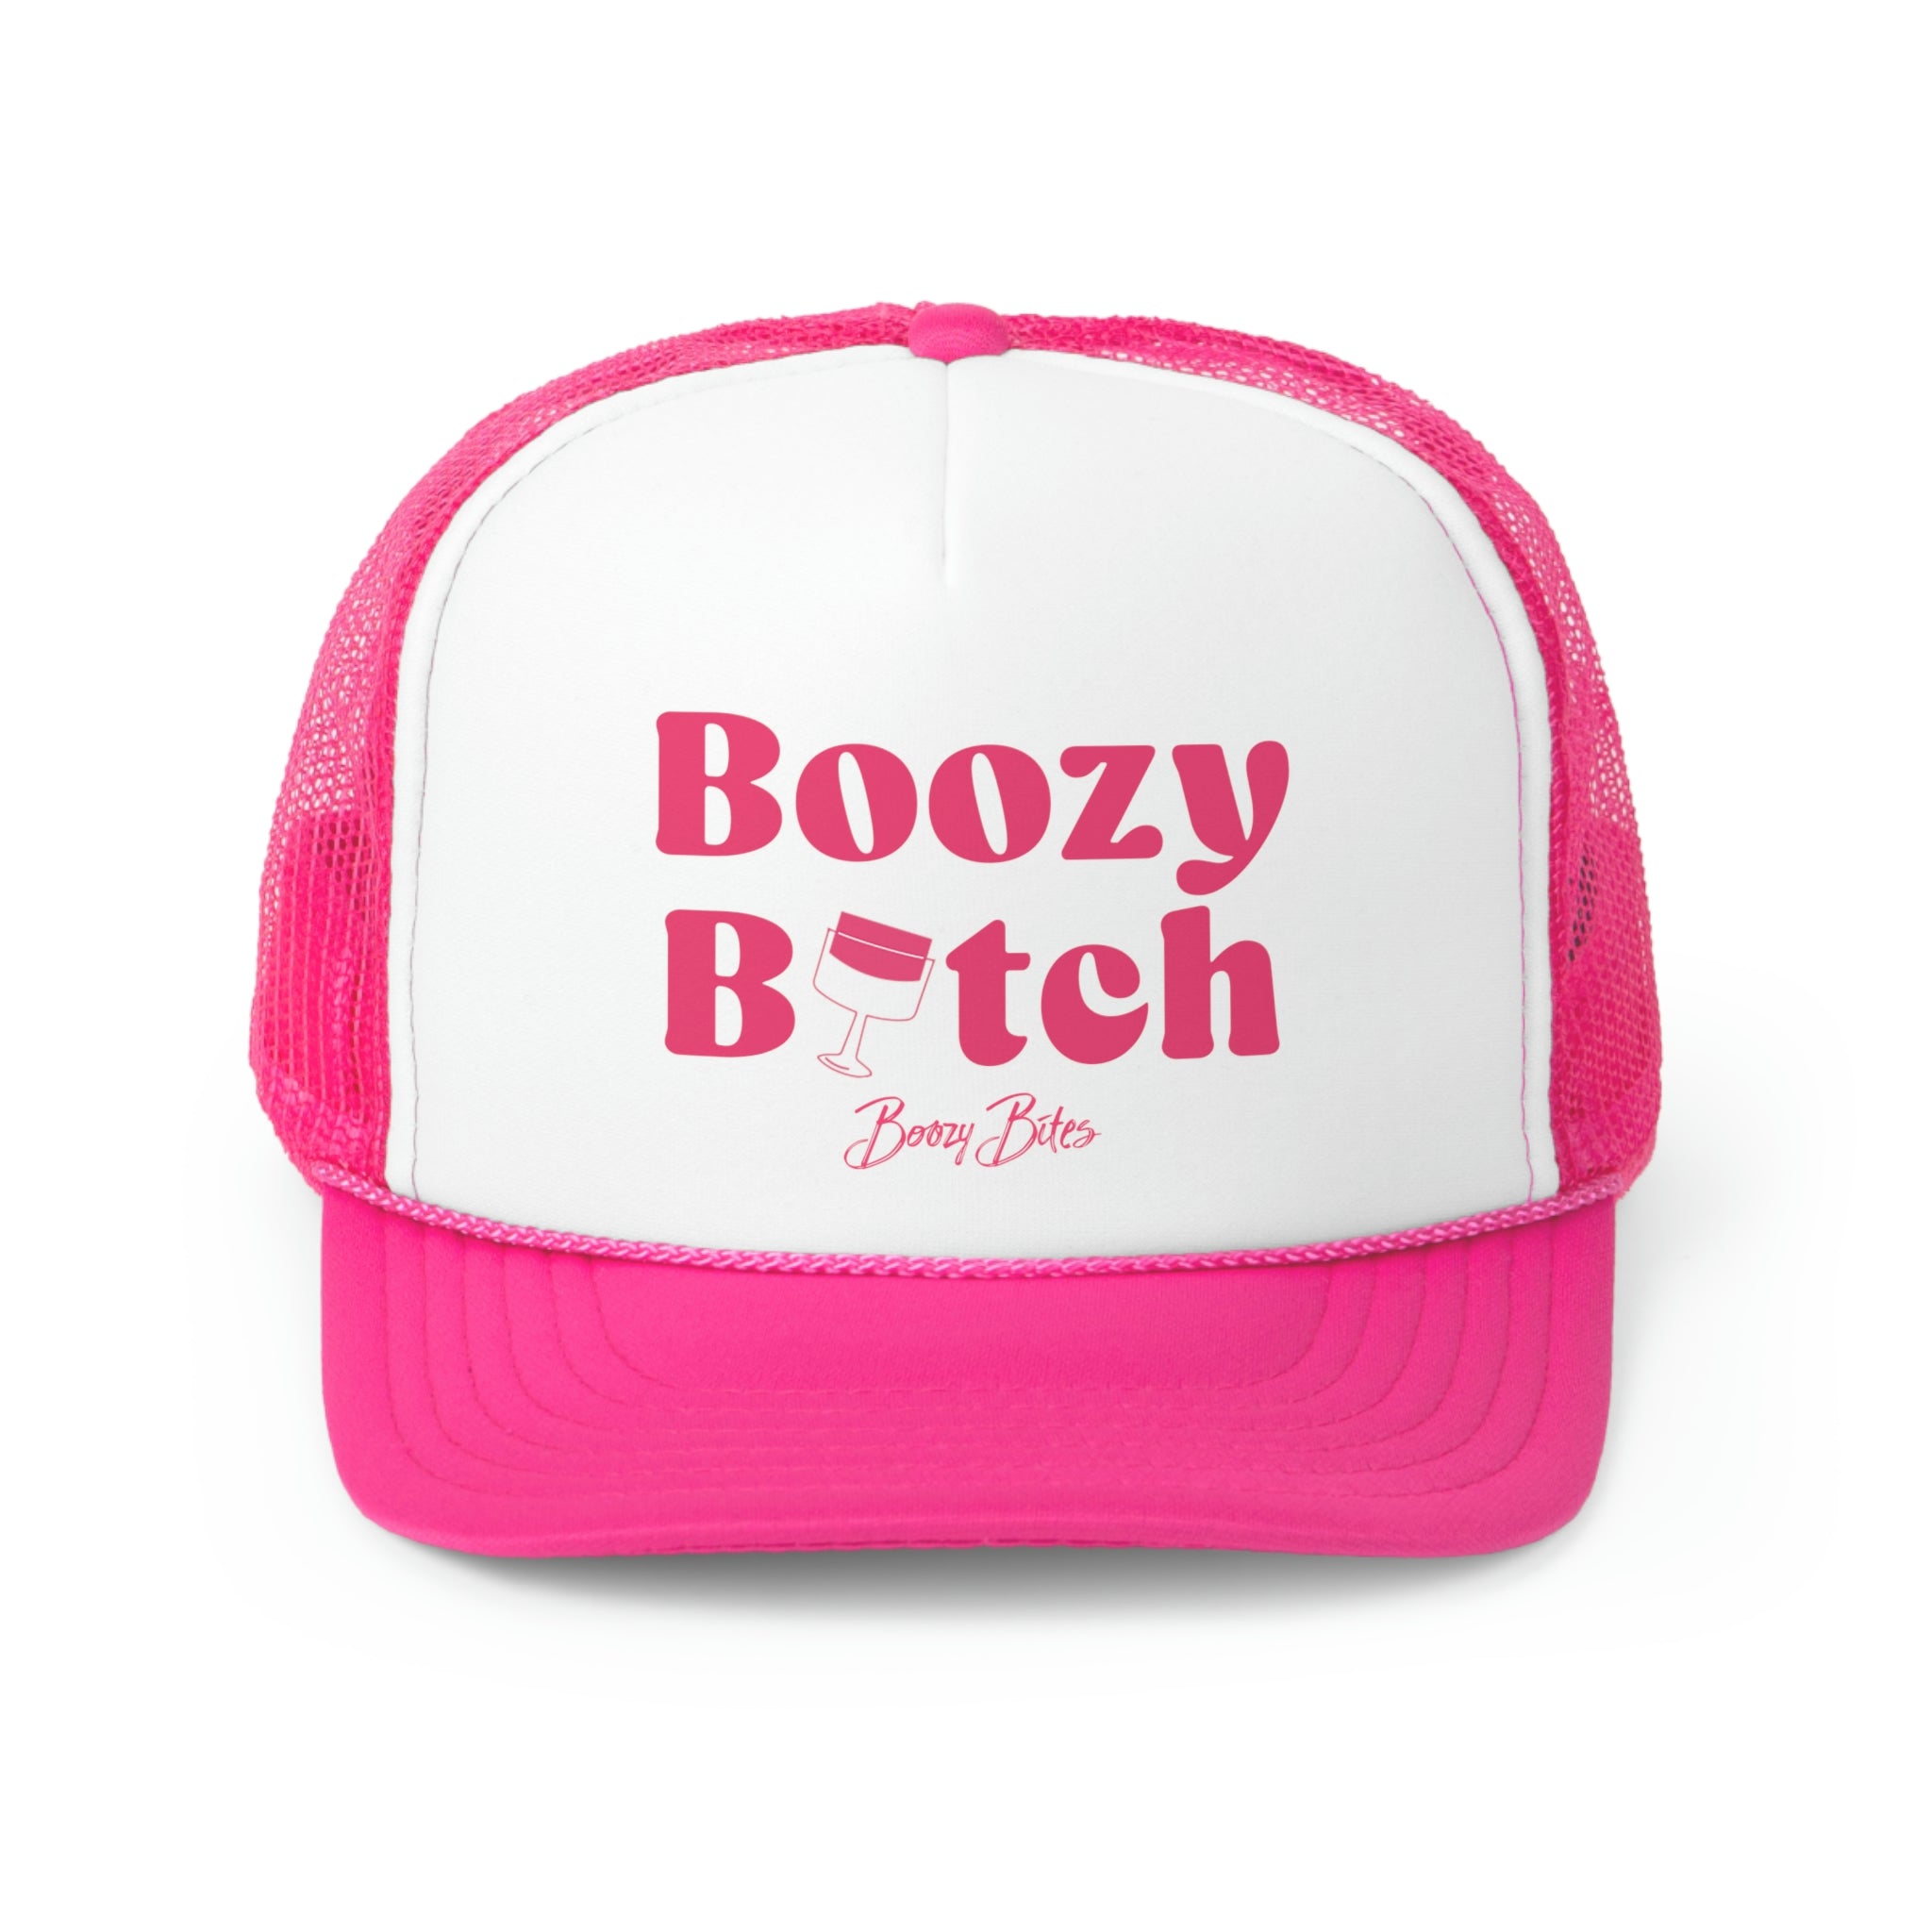 Boozy B*tch Trucker Cap